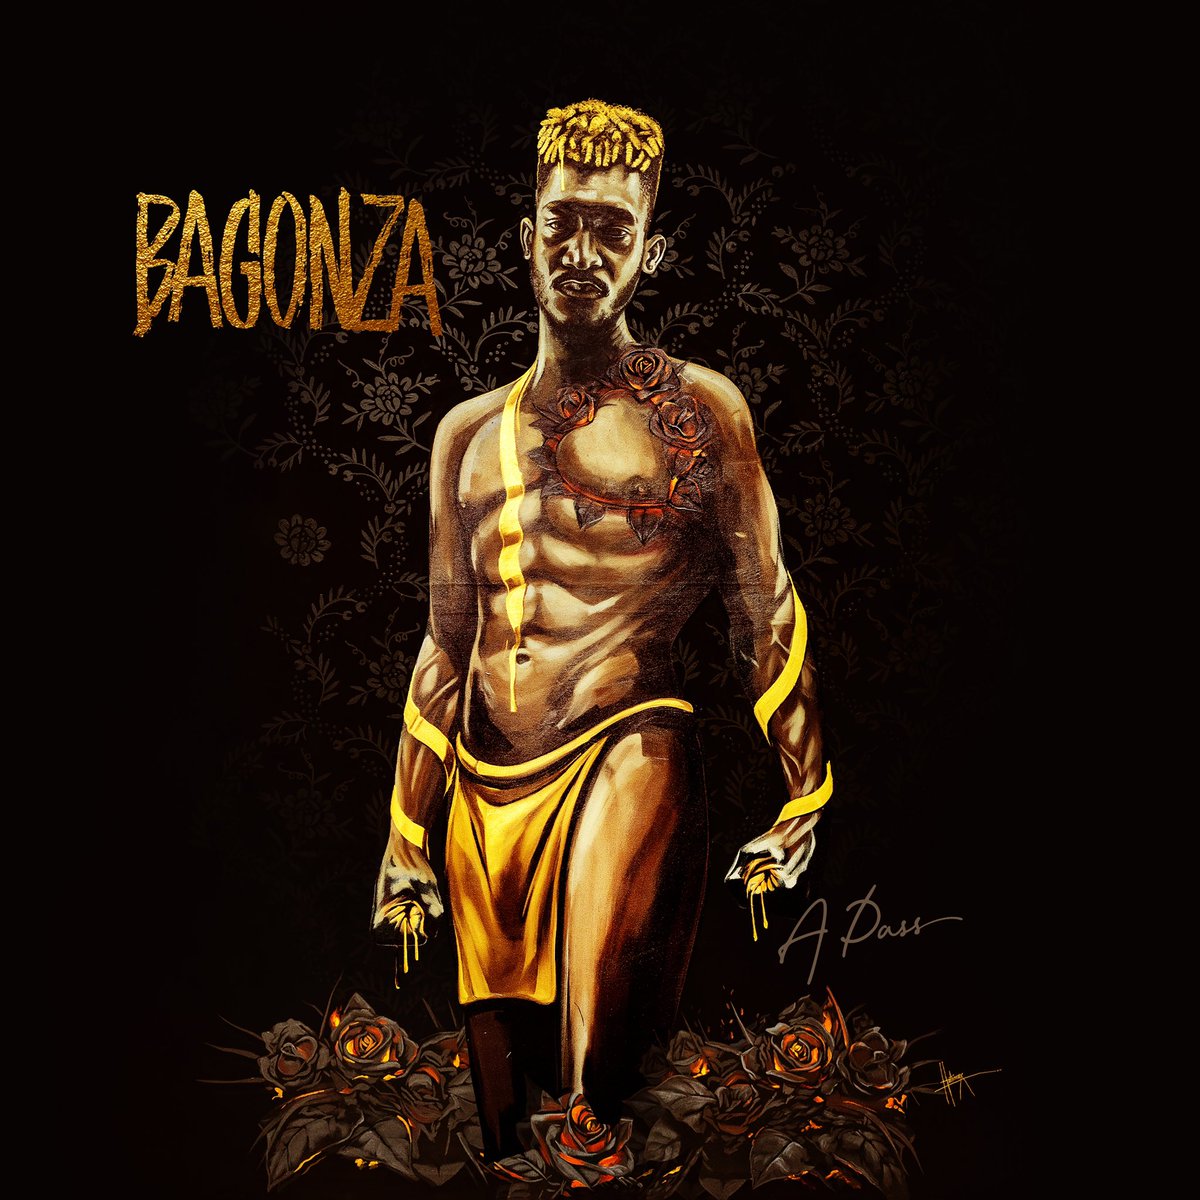 #BagonzaTheAlbum 
@IamApass